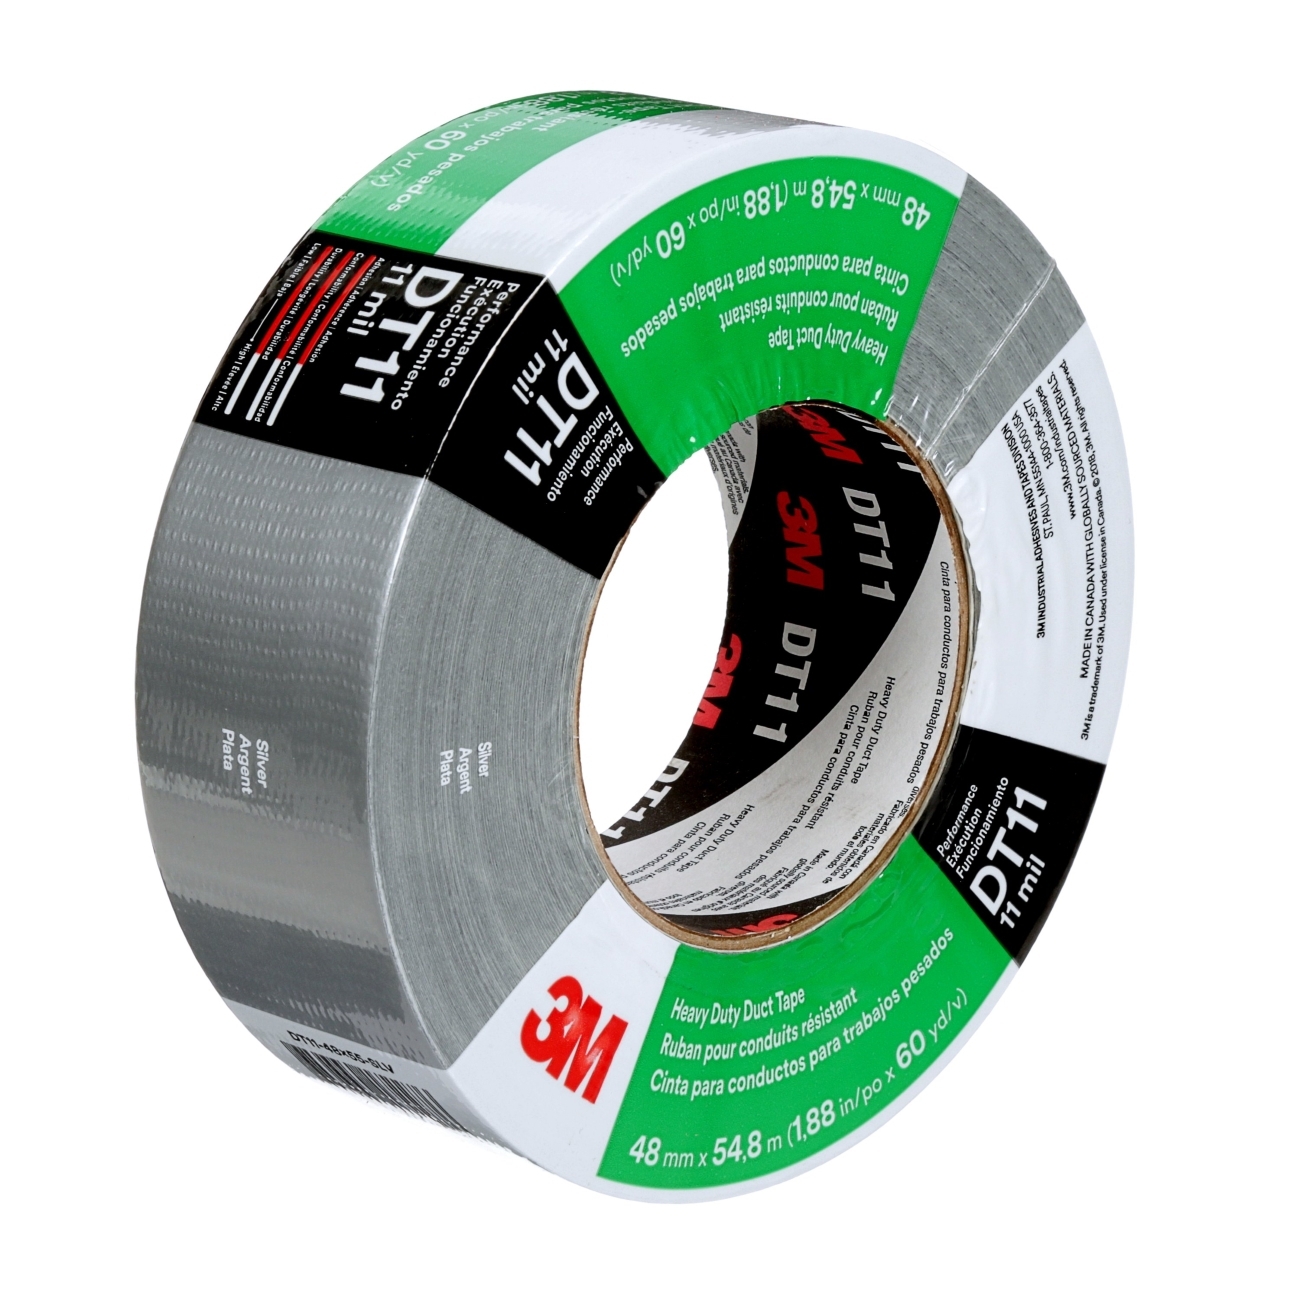 3M heavy duty fabric tape DT11, black, 48 mm x 55 m, 0.28 mm